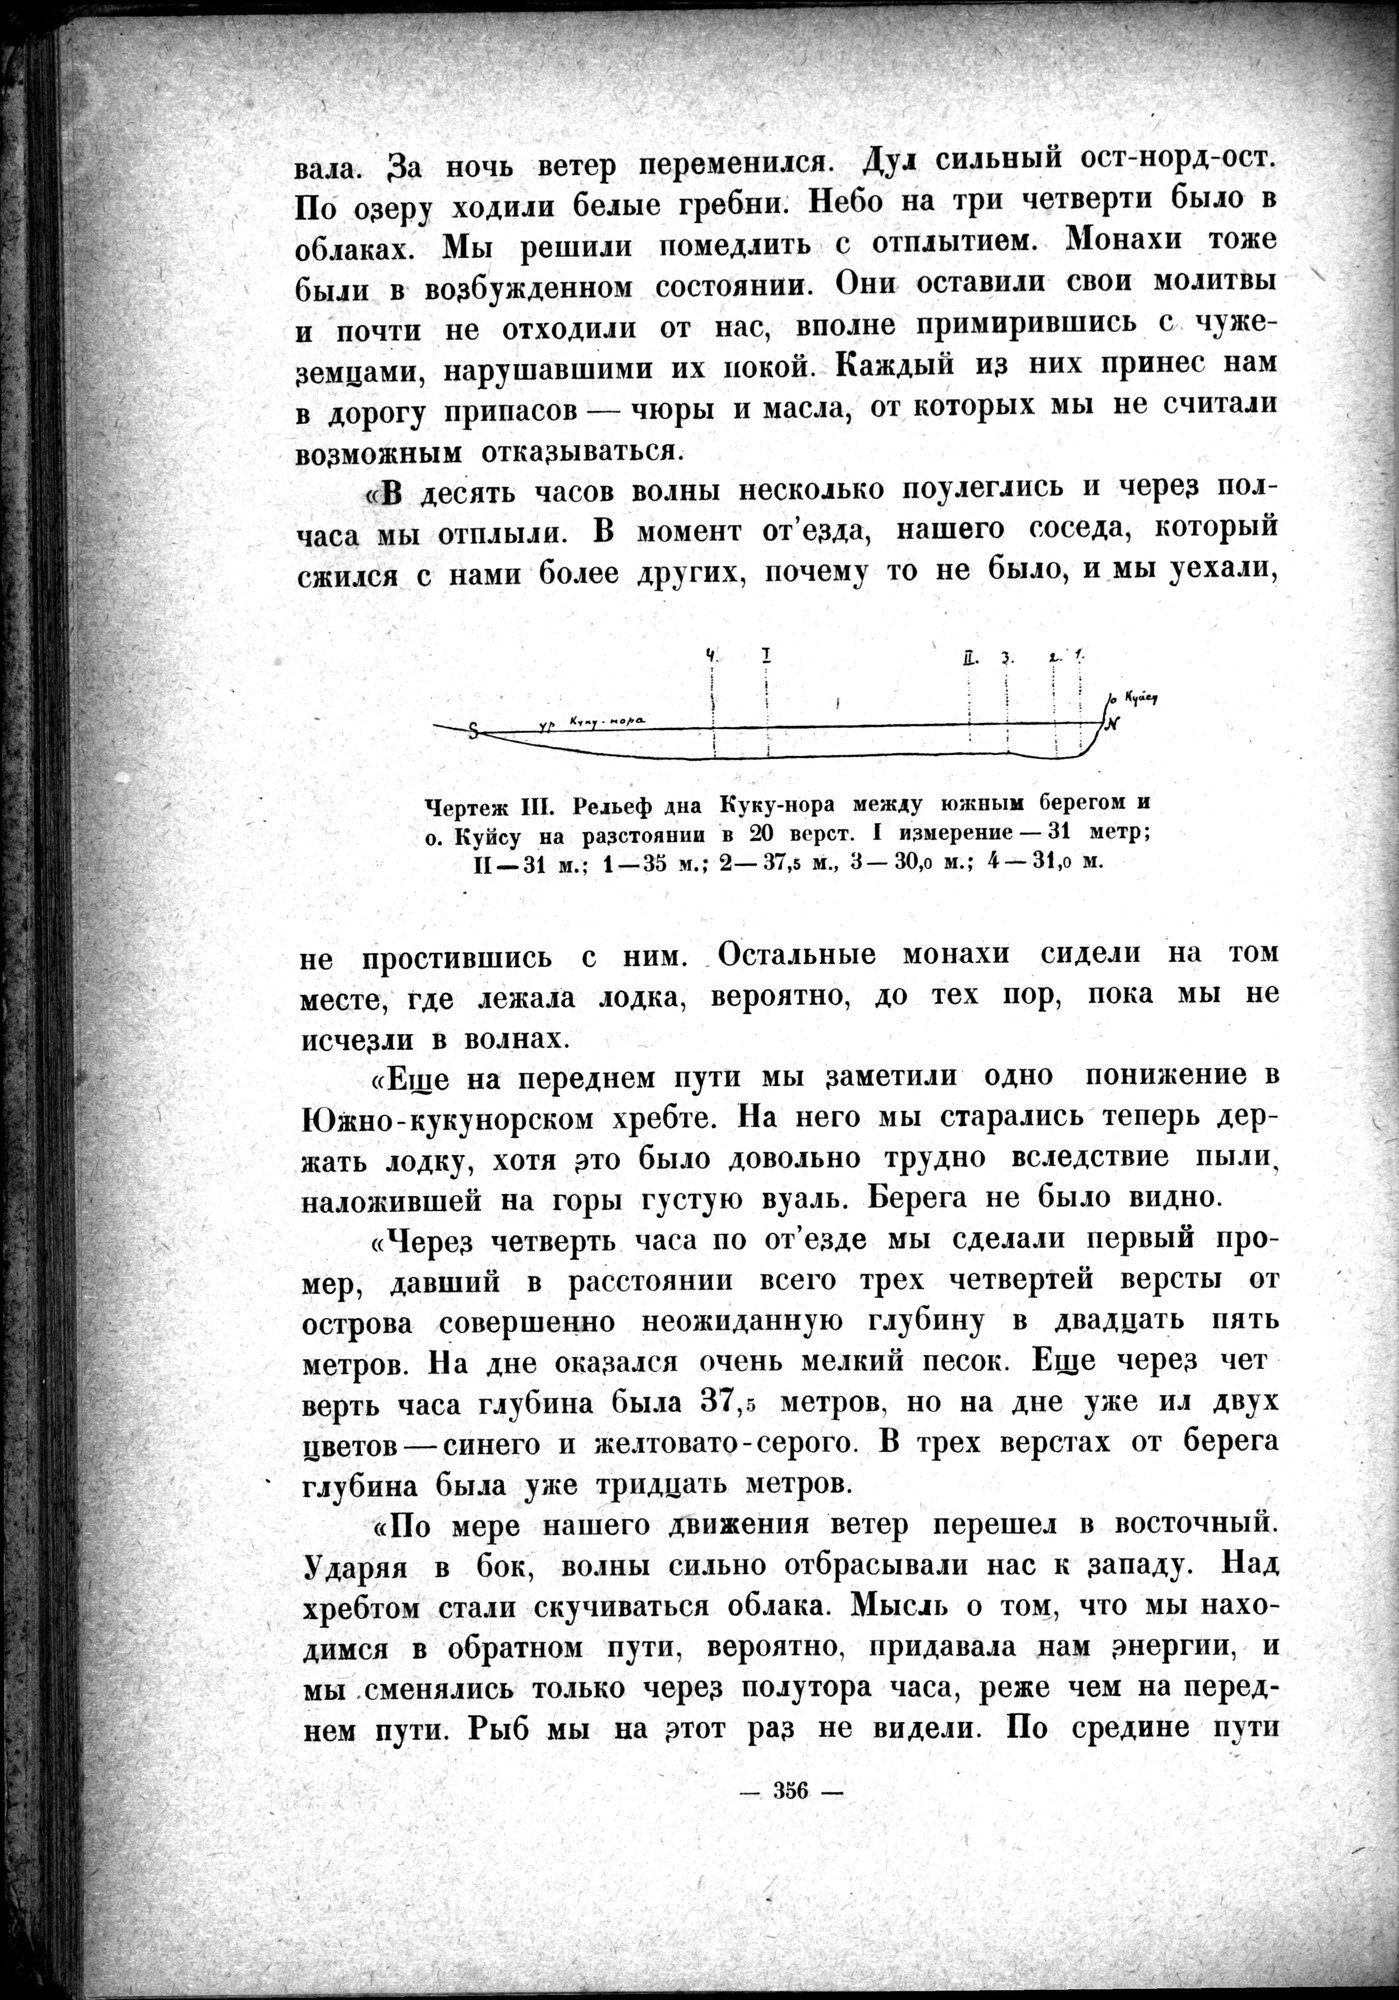 Mongoliya i Amdo i mertby gorod Khara-Khoto : vol.1 / Page 406 (Grayscale High Resolution Image)